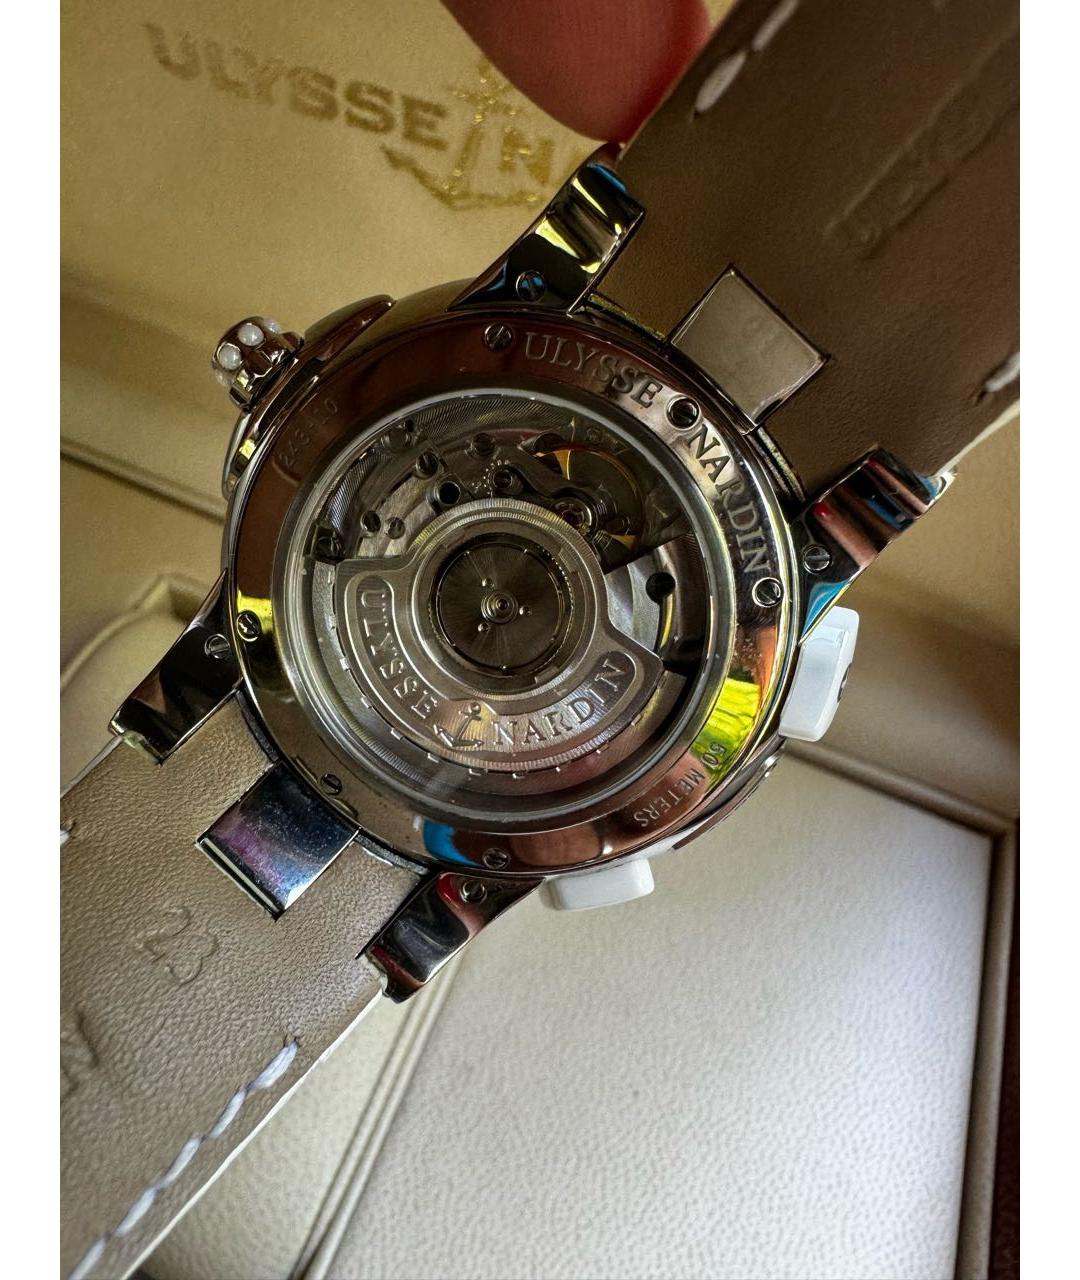 Ulysse Nardin Белые металлические часы, фото 2